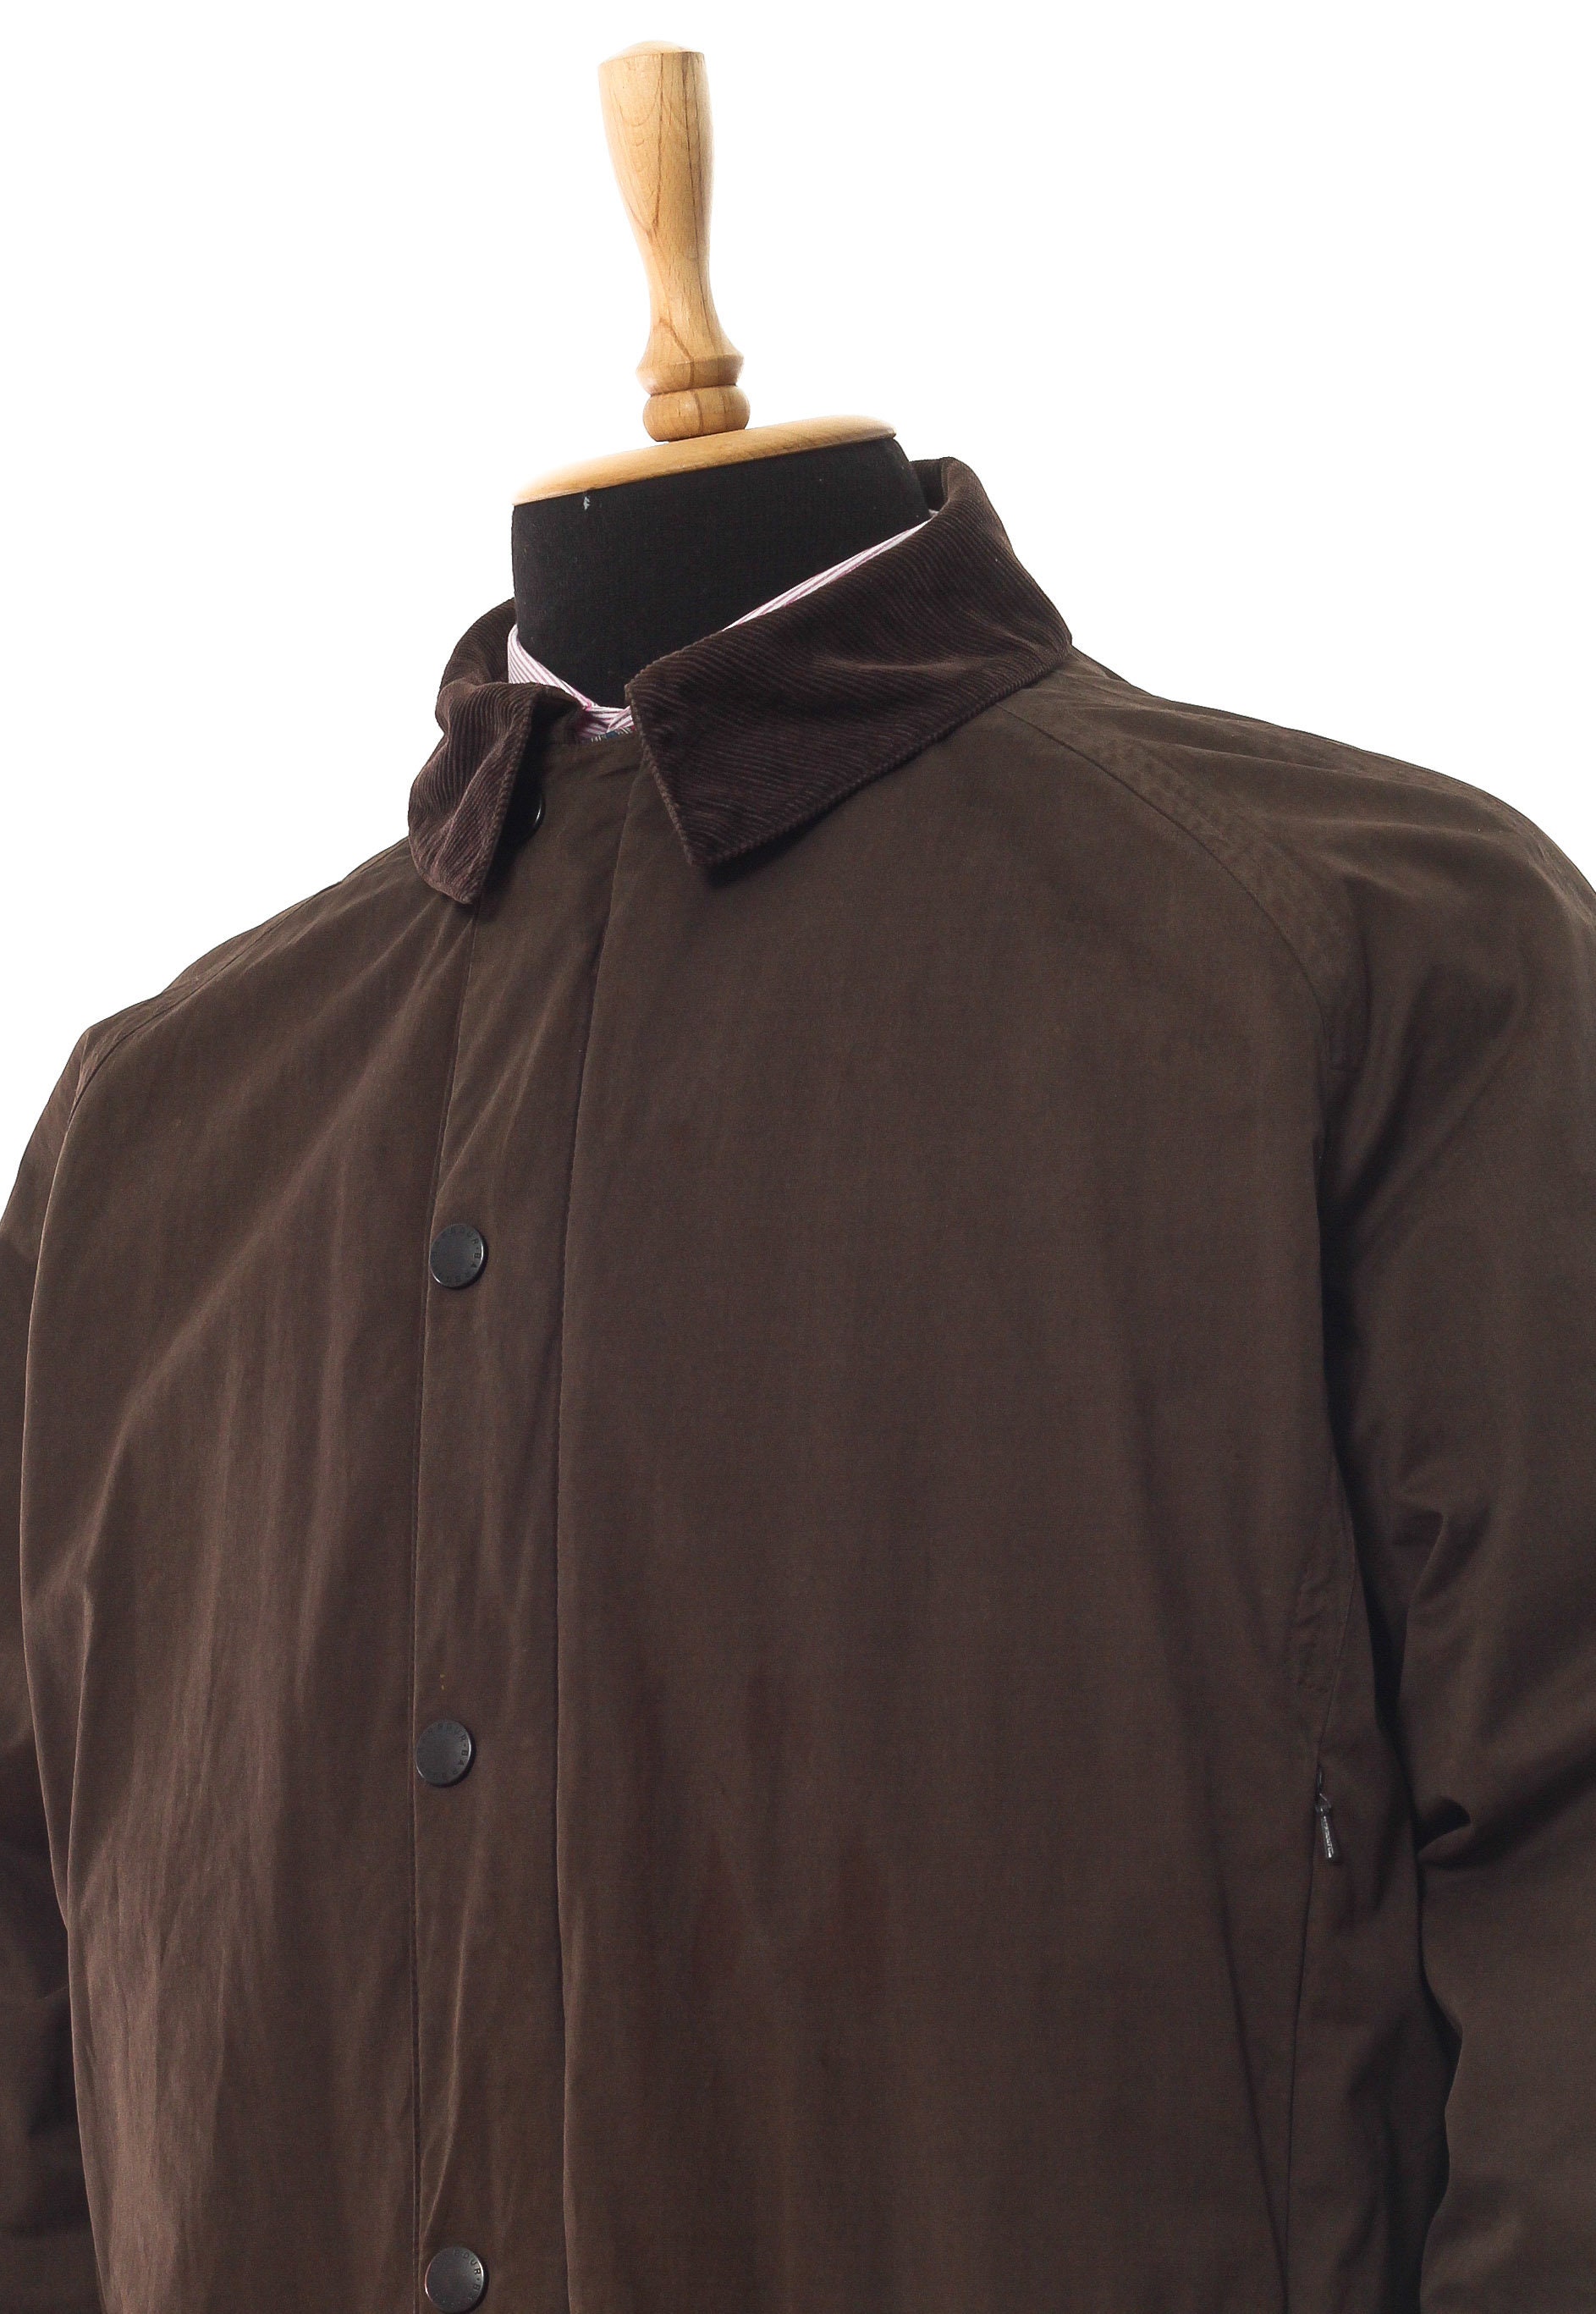 Mens BARBOUR Winter Beauchamp Travel Jacket Coat Shell Brown | Etsy